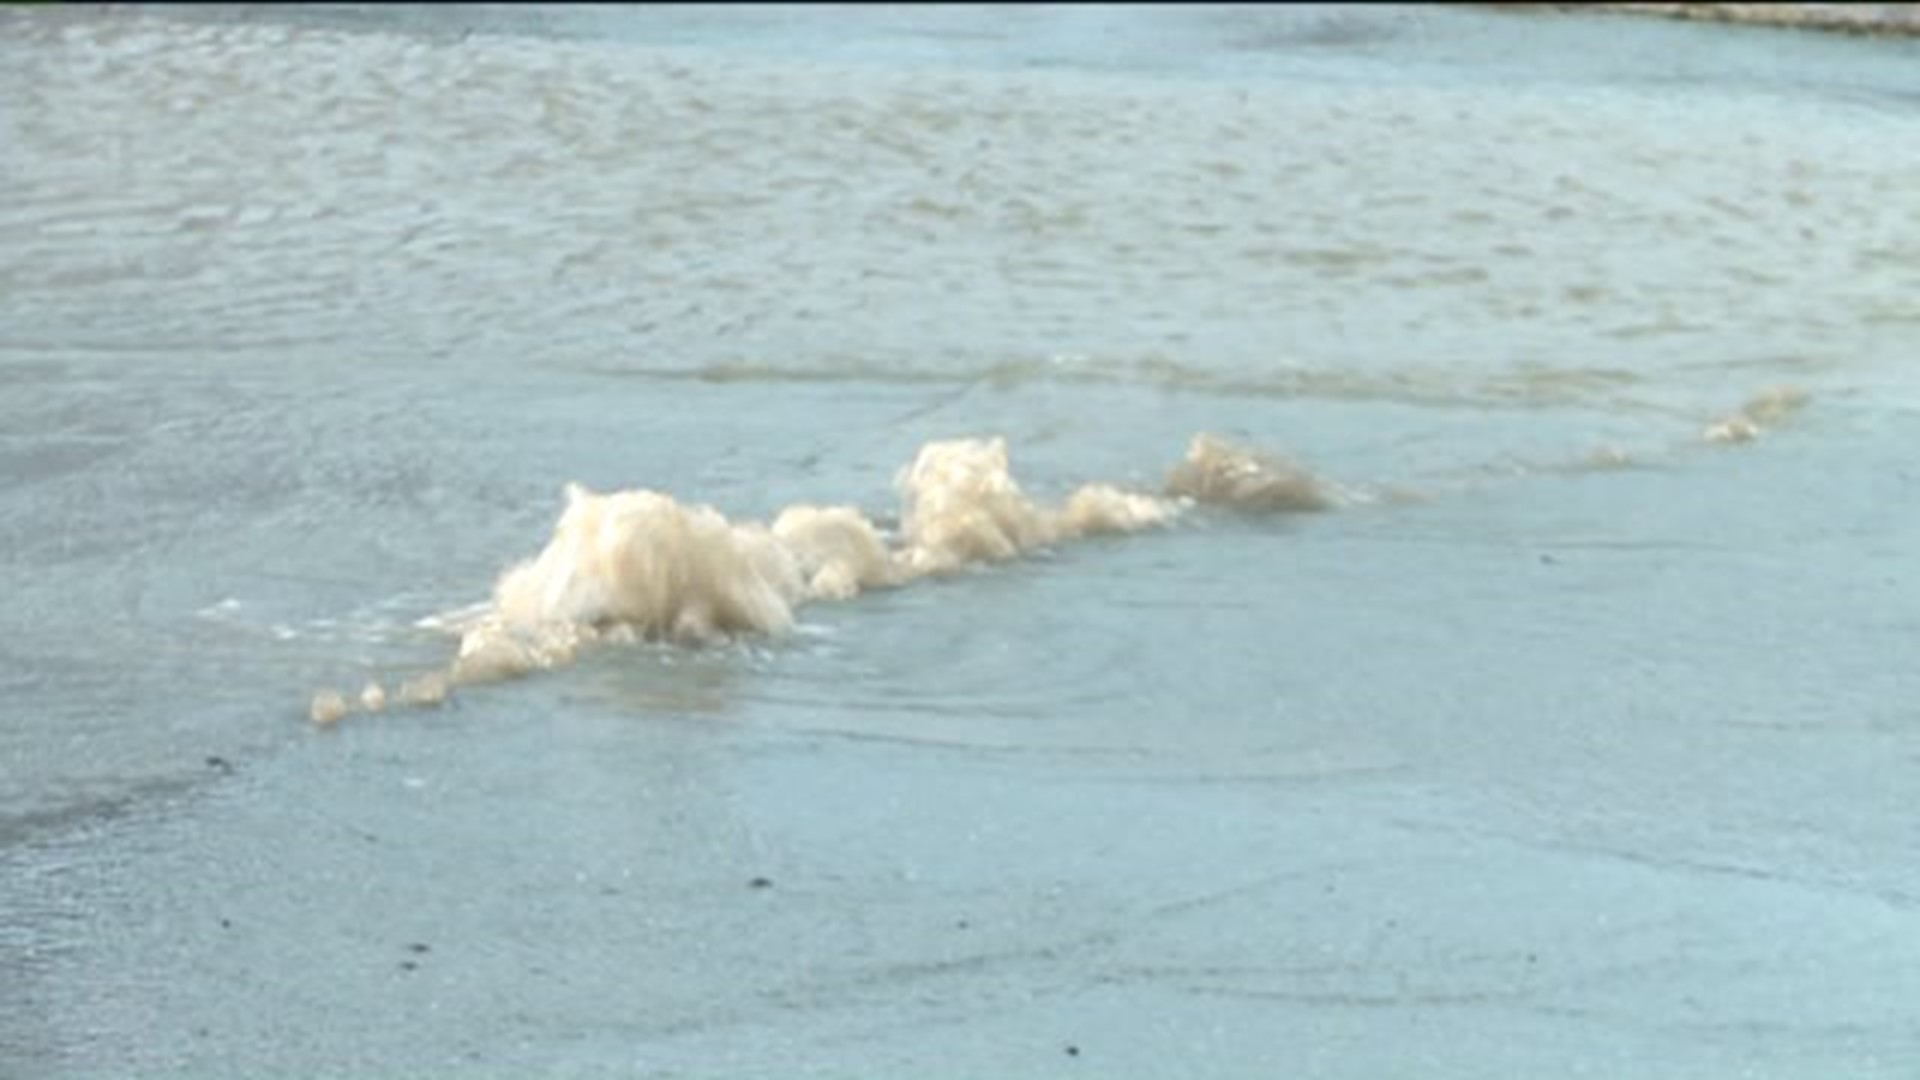 Water Main Break in Scranton Closes Road, Floods Basements